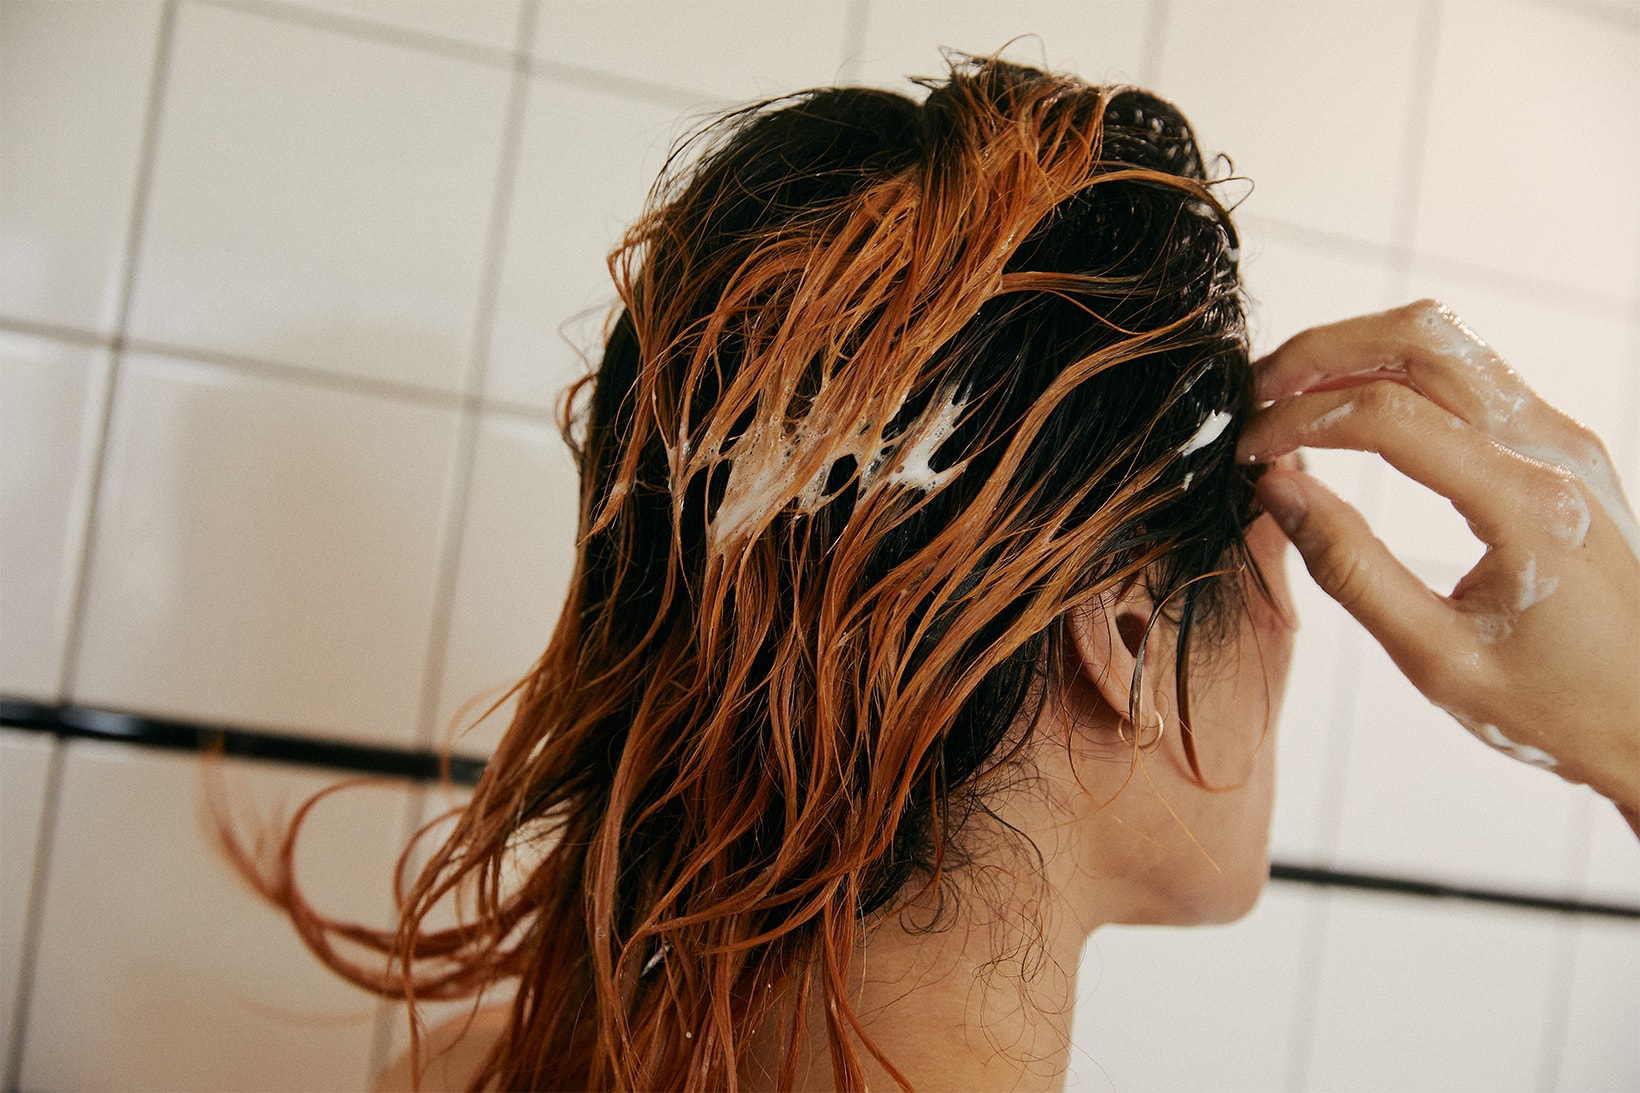 susteau moondust conditioner shampoo wash waterless sustainability vegan clean beauty shower